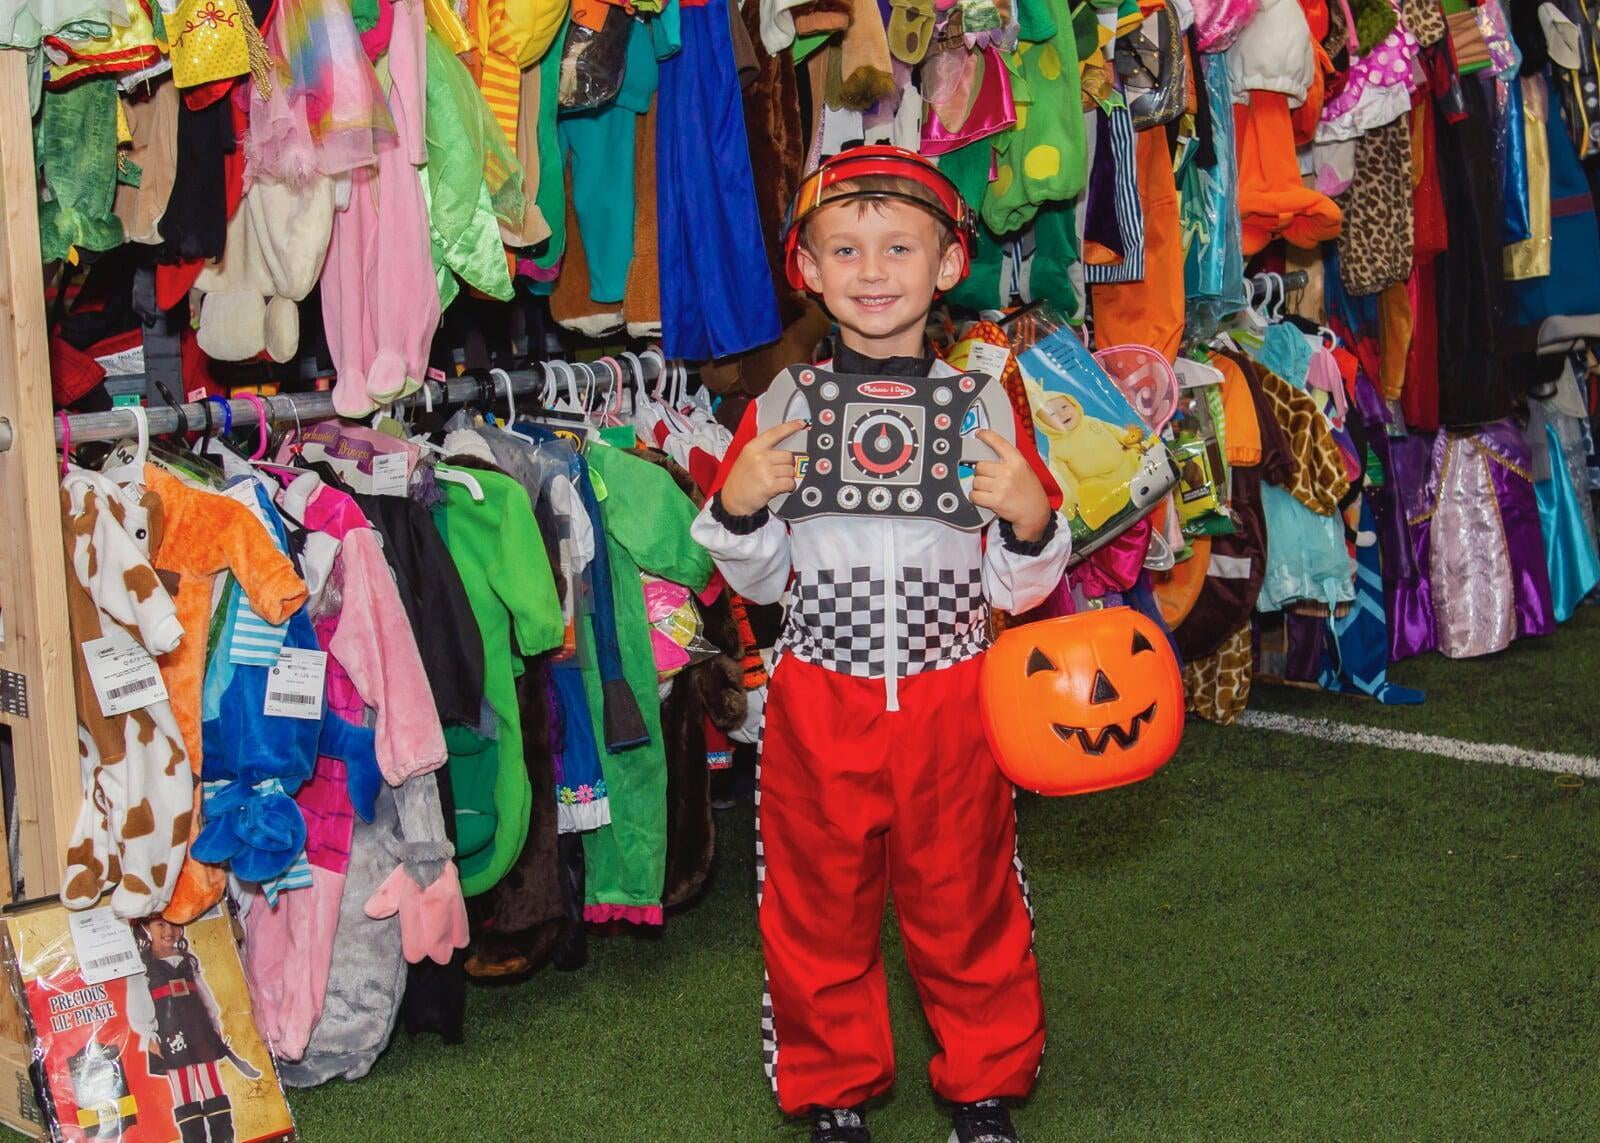 Boy in a halloween costume holding an orange plastic pumpkin.